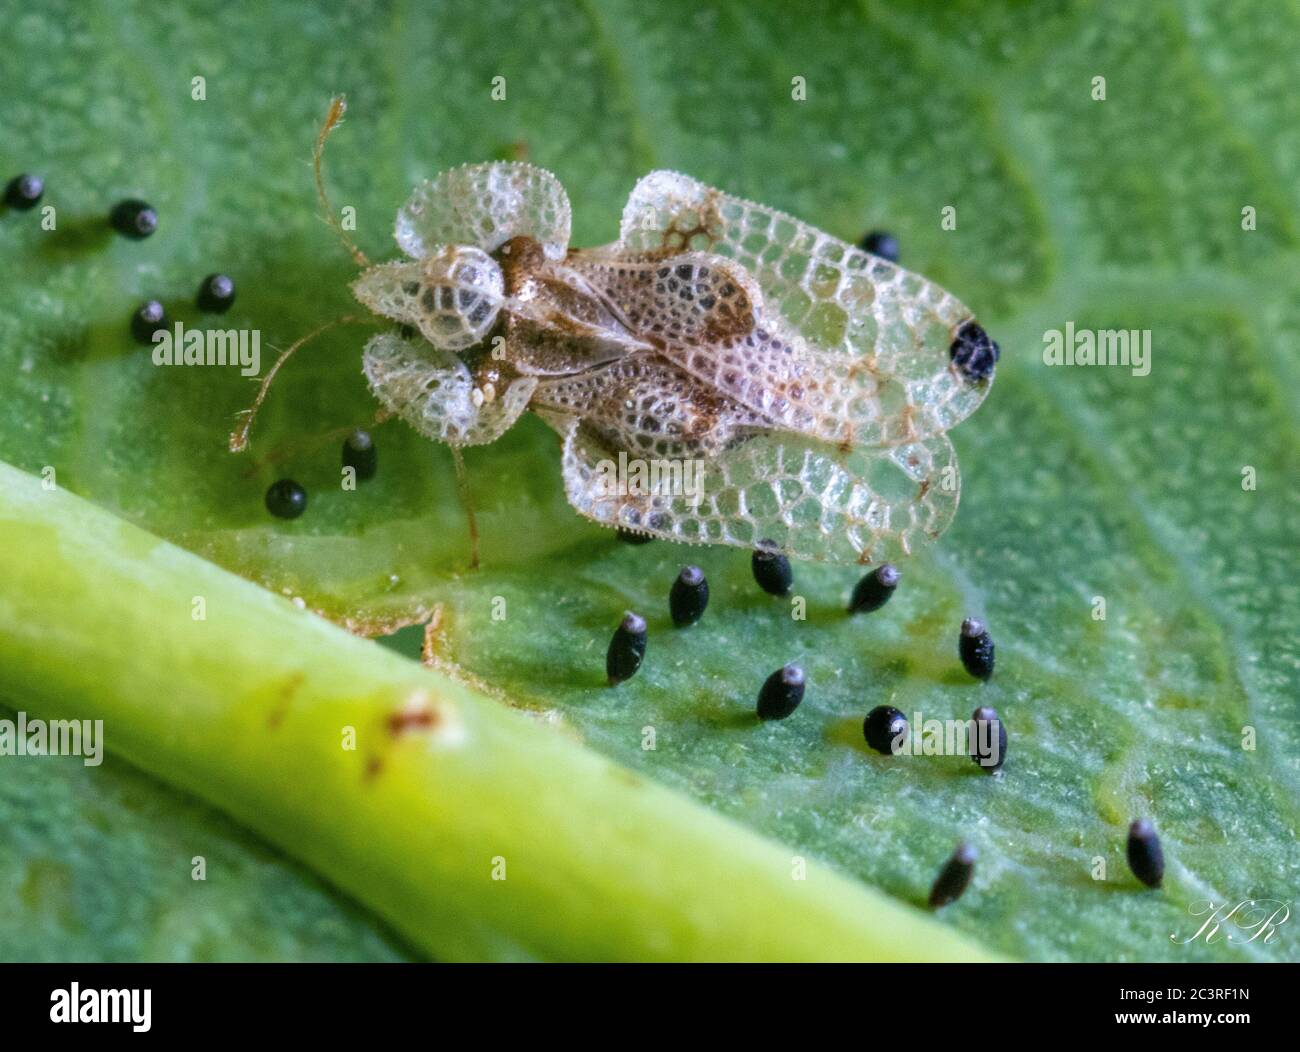 Closeup shot of an oak lace bug on a leaf surface Stock Photo